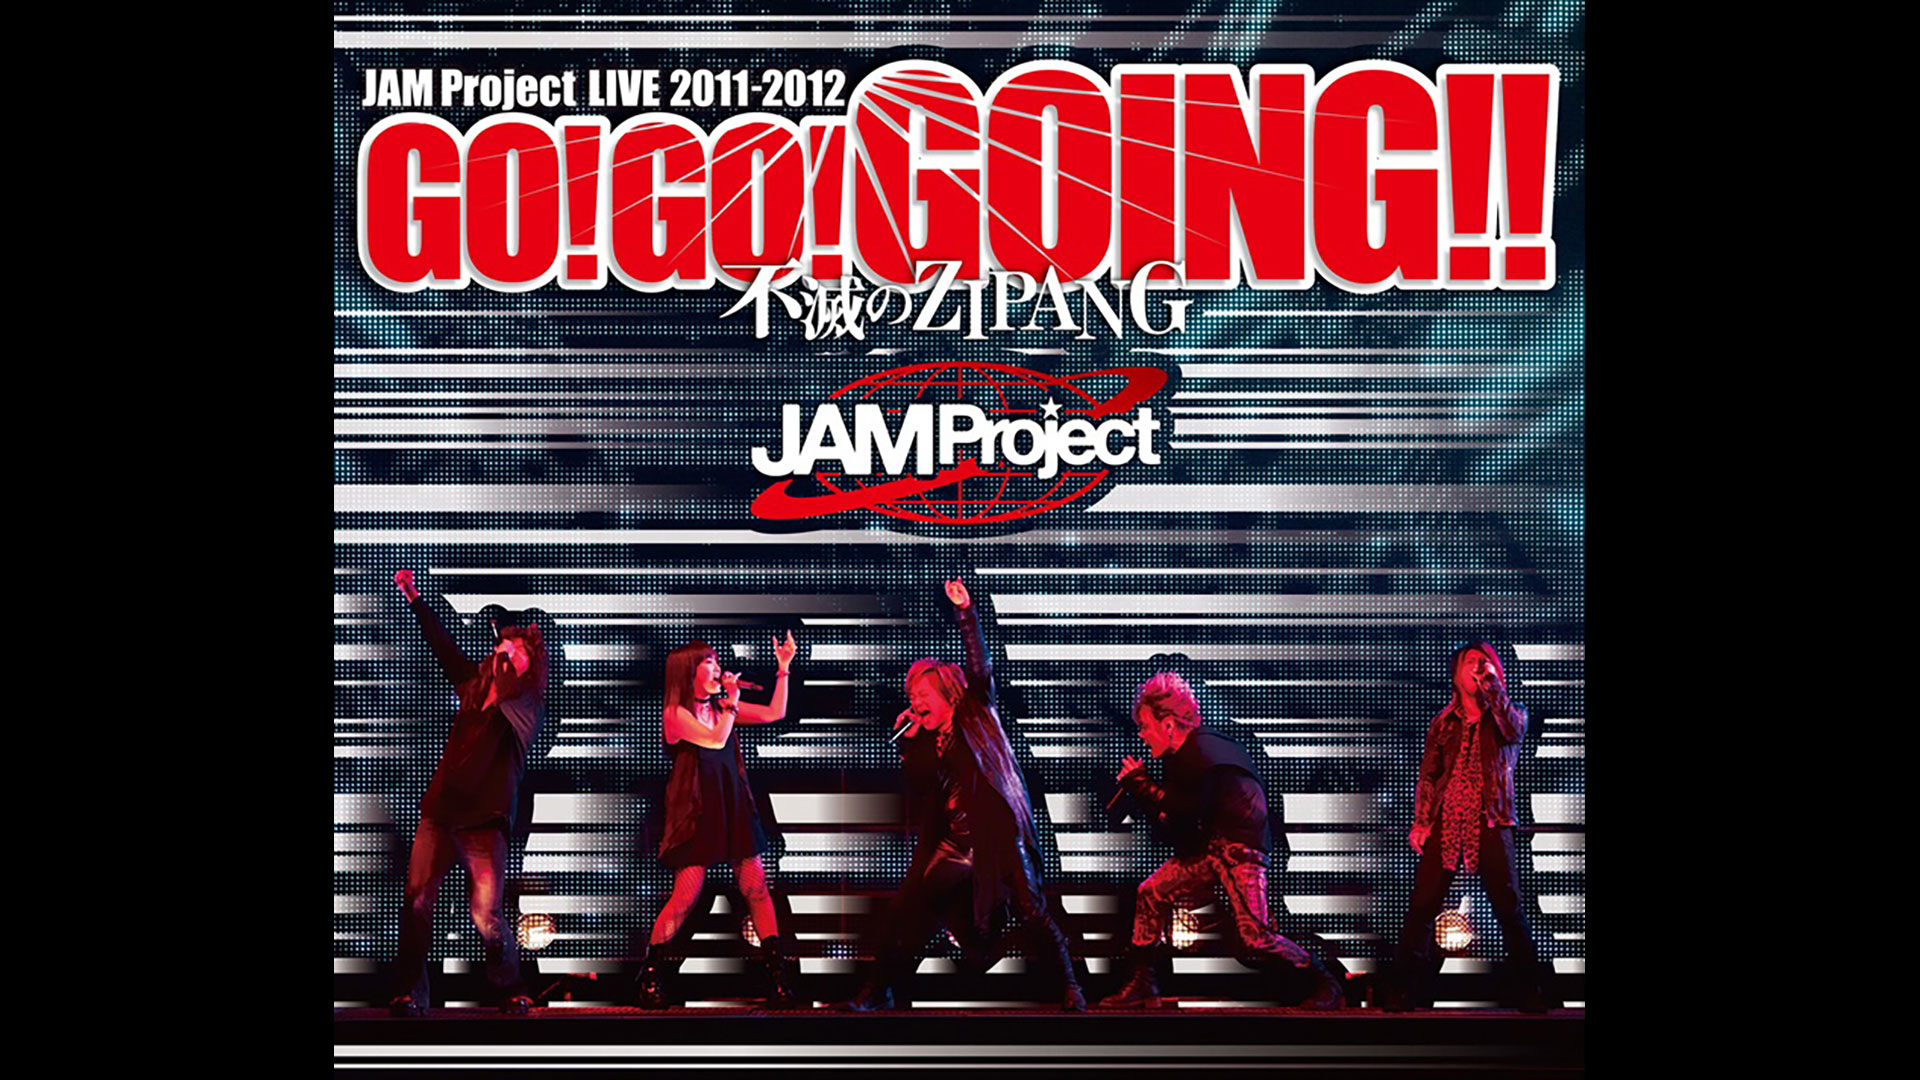 Jam Project Live 11 12 Go Go Going 不滅のzipang バンダイチャンネル 初回おためし無料のアニメ配信サービス